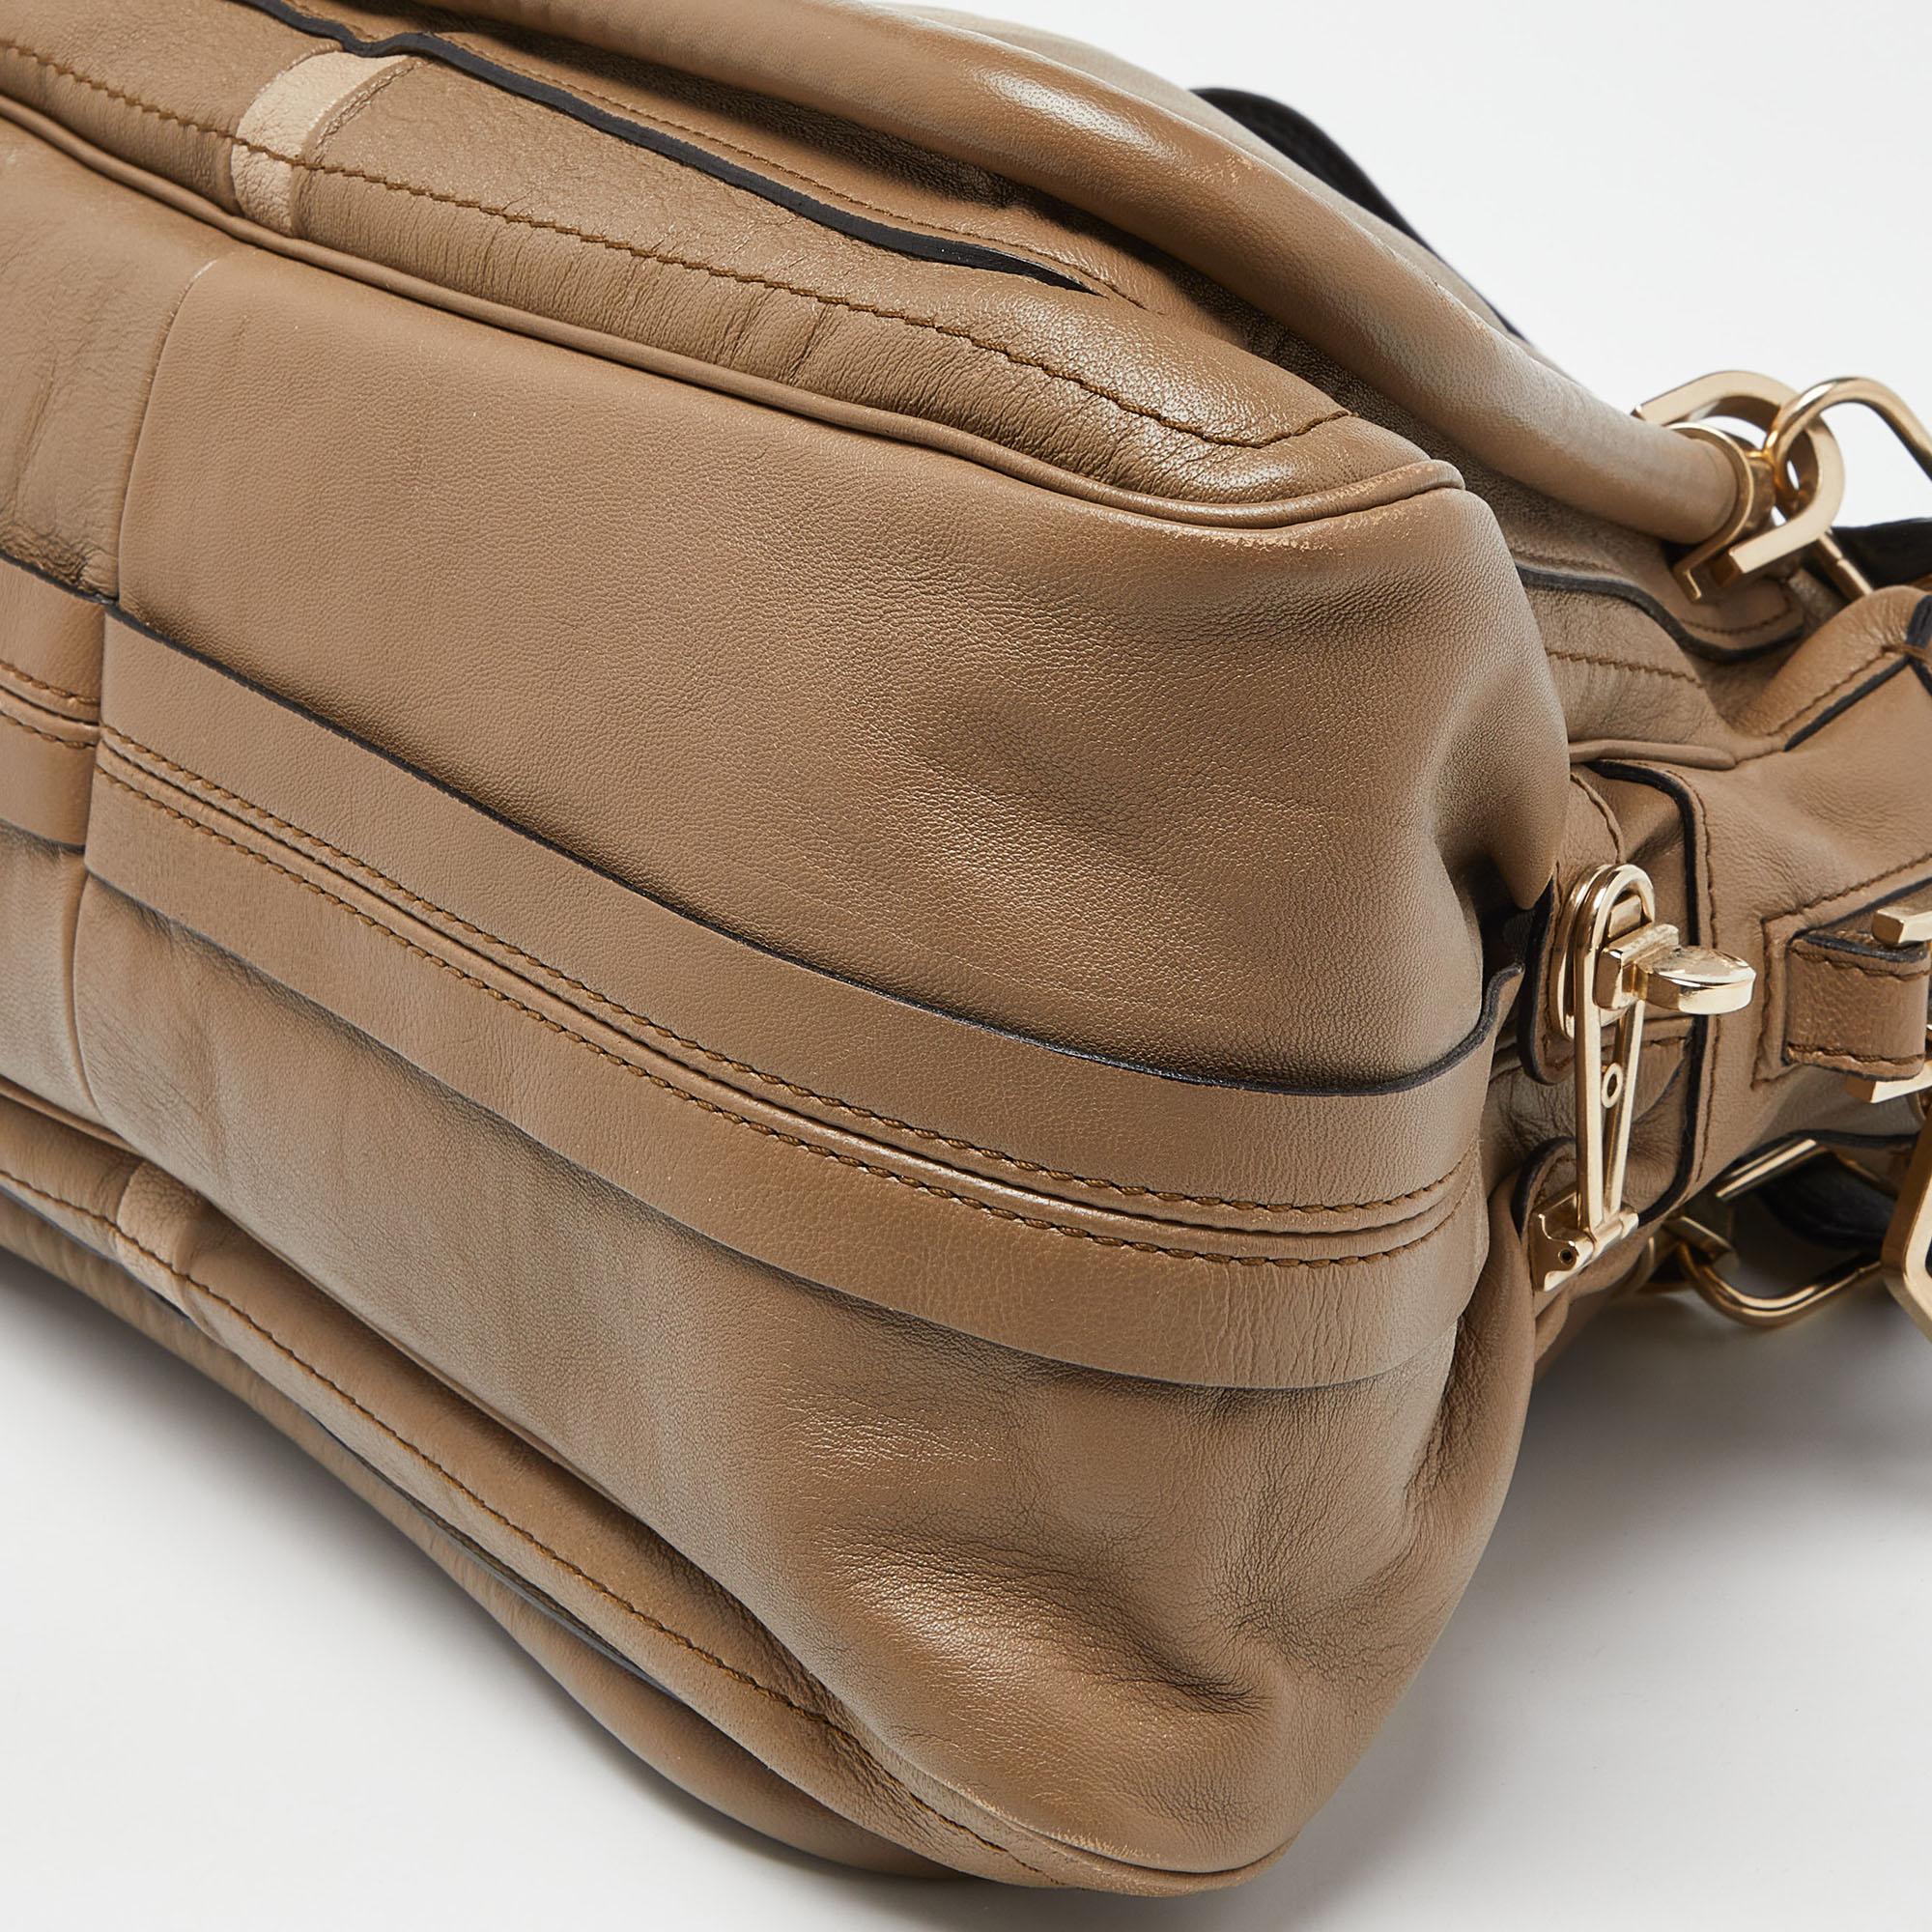 Chloe Beige/Black Leather Medium Paraty Handbag For Sale 2